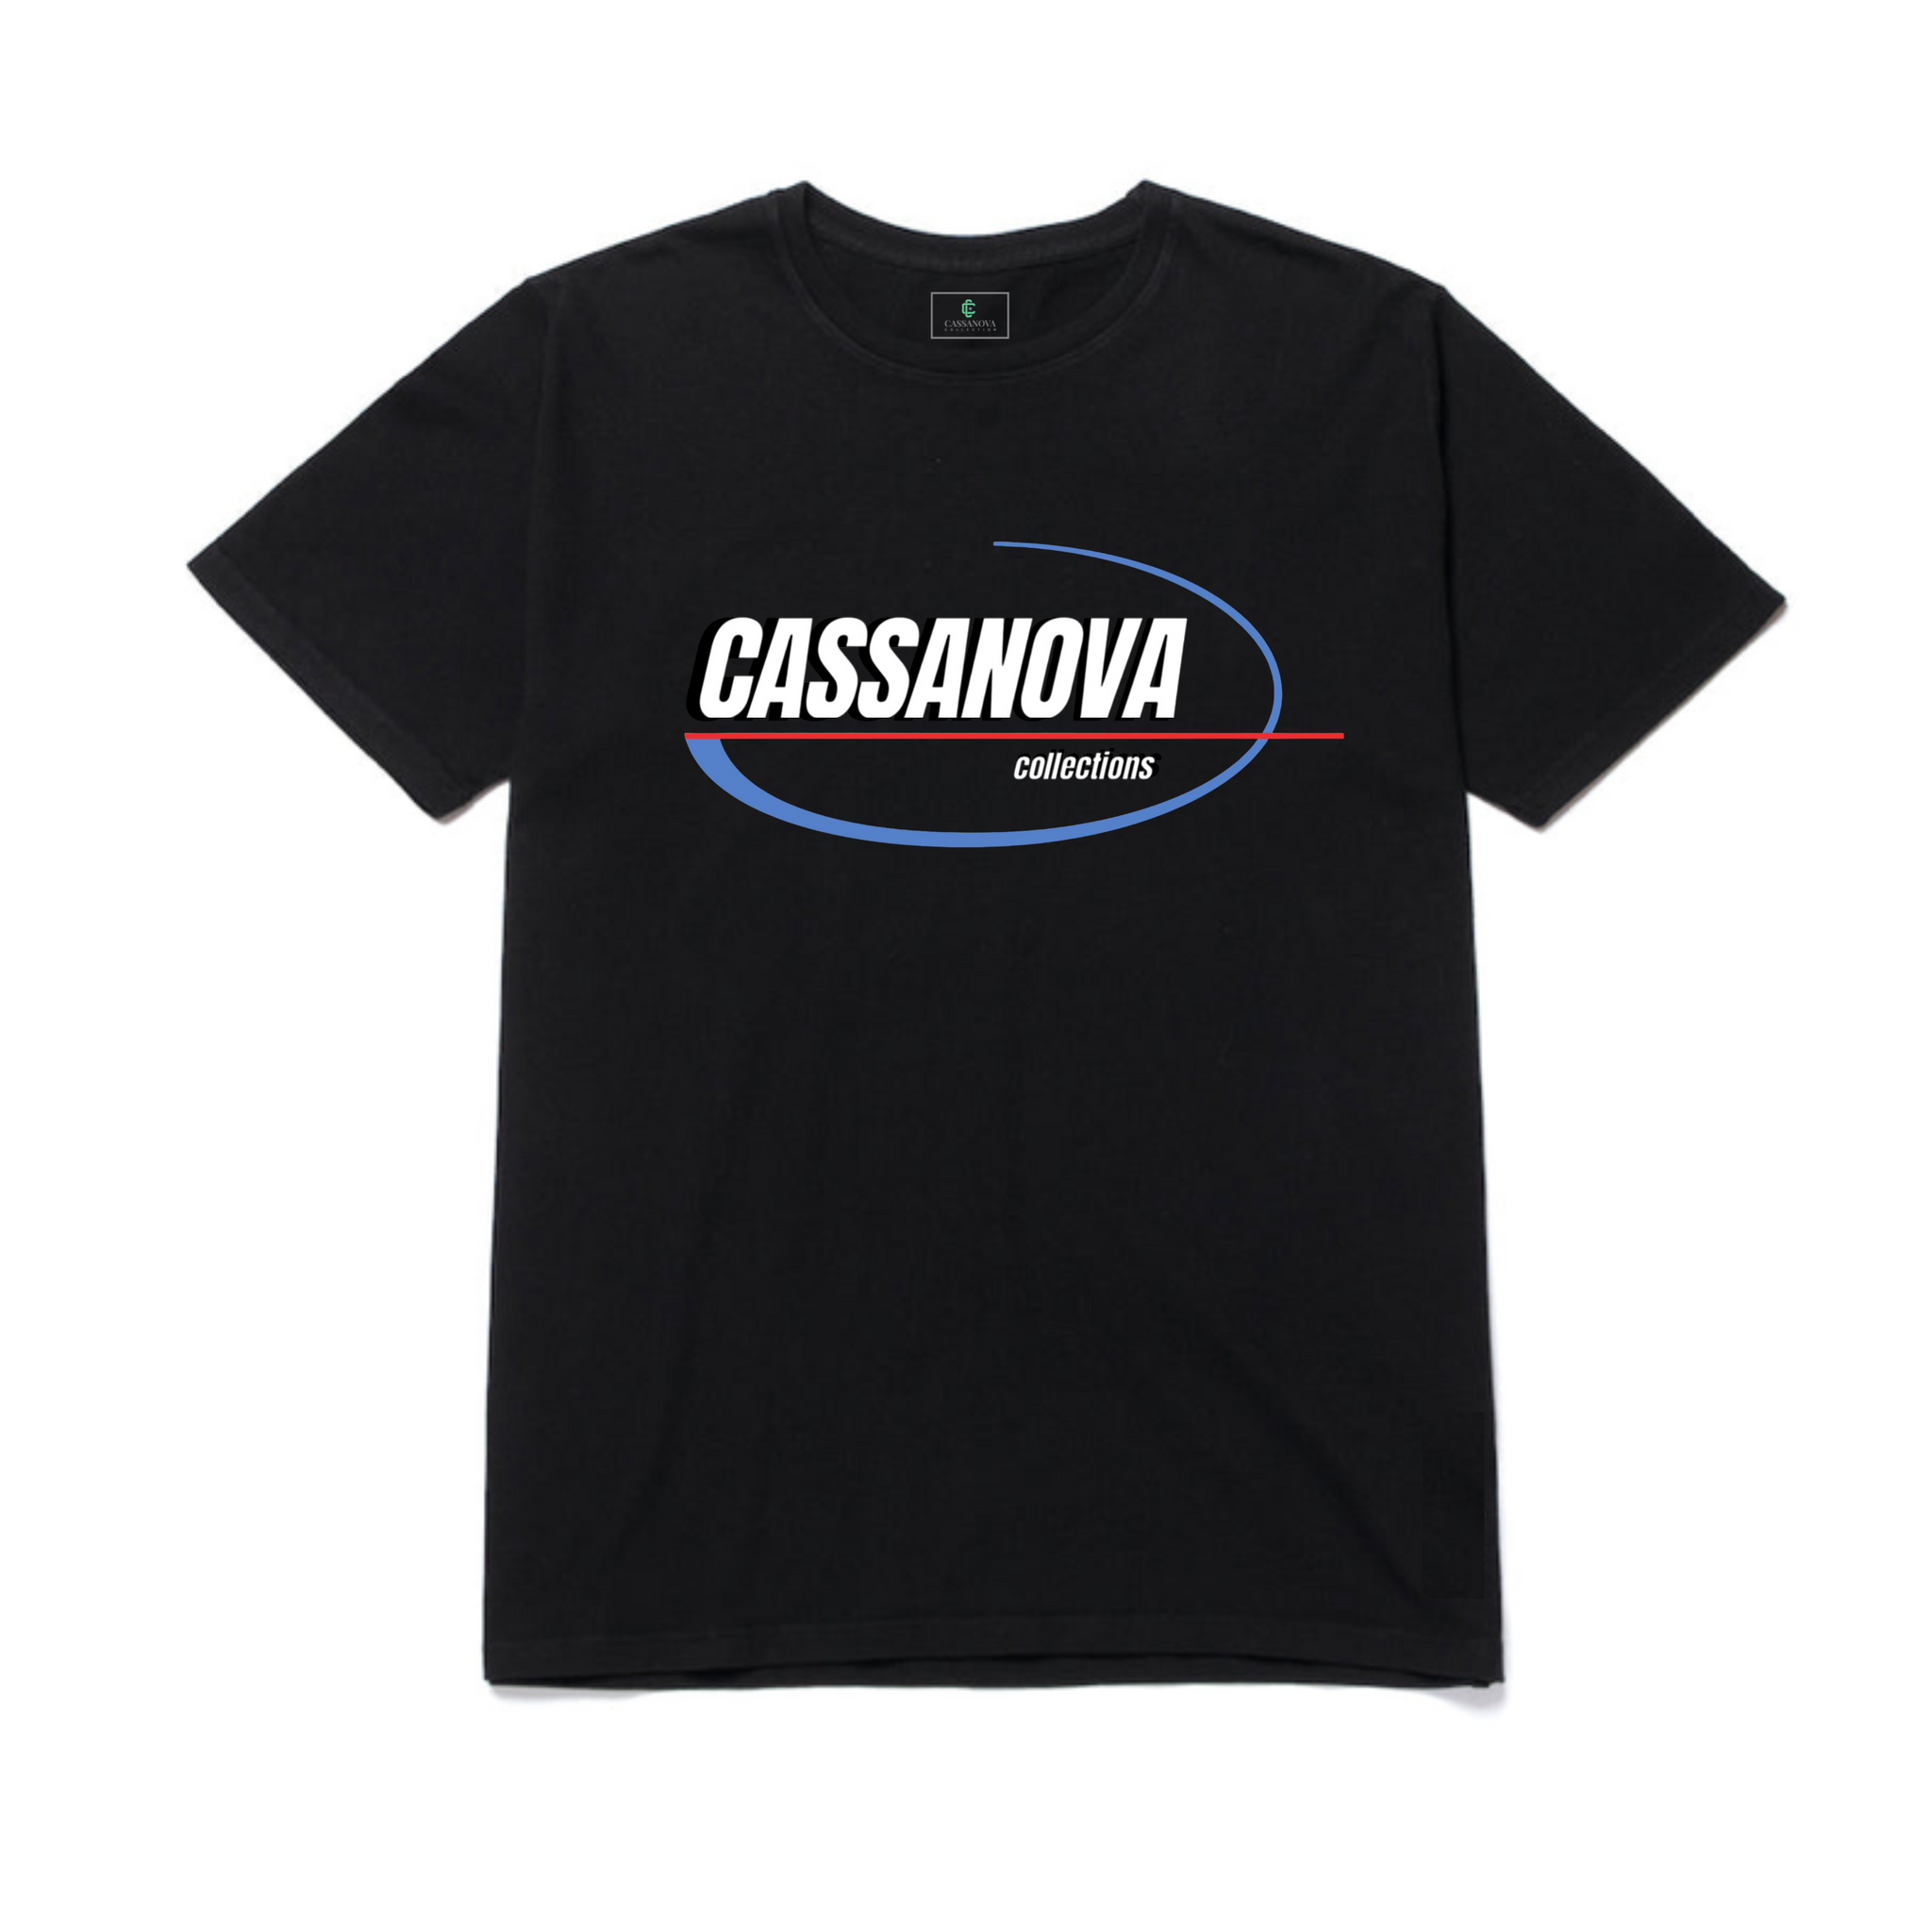 Cassanova Pharma Tshirt